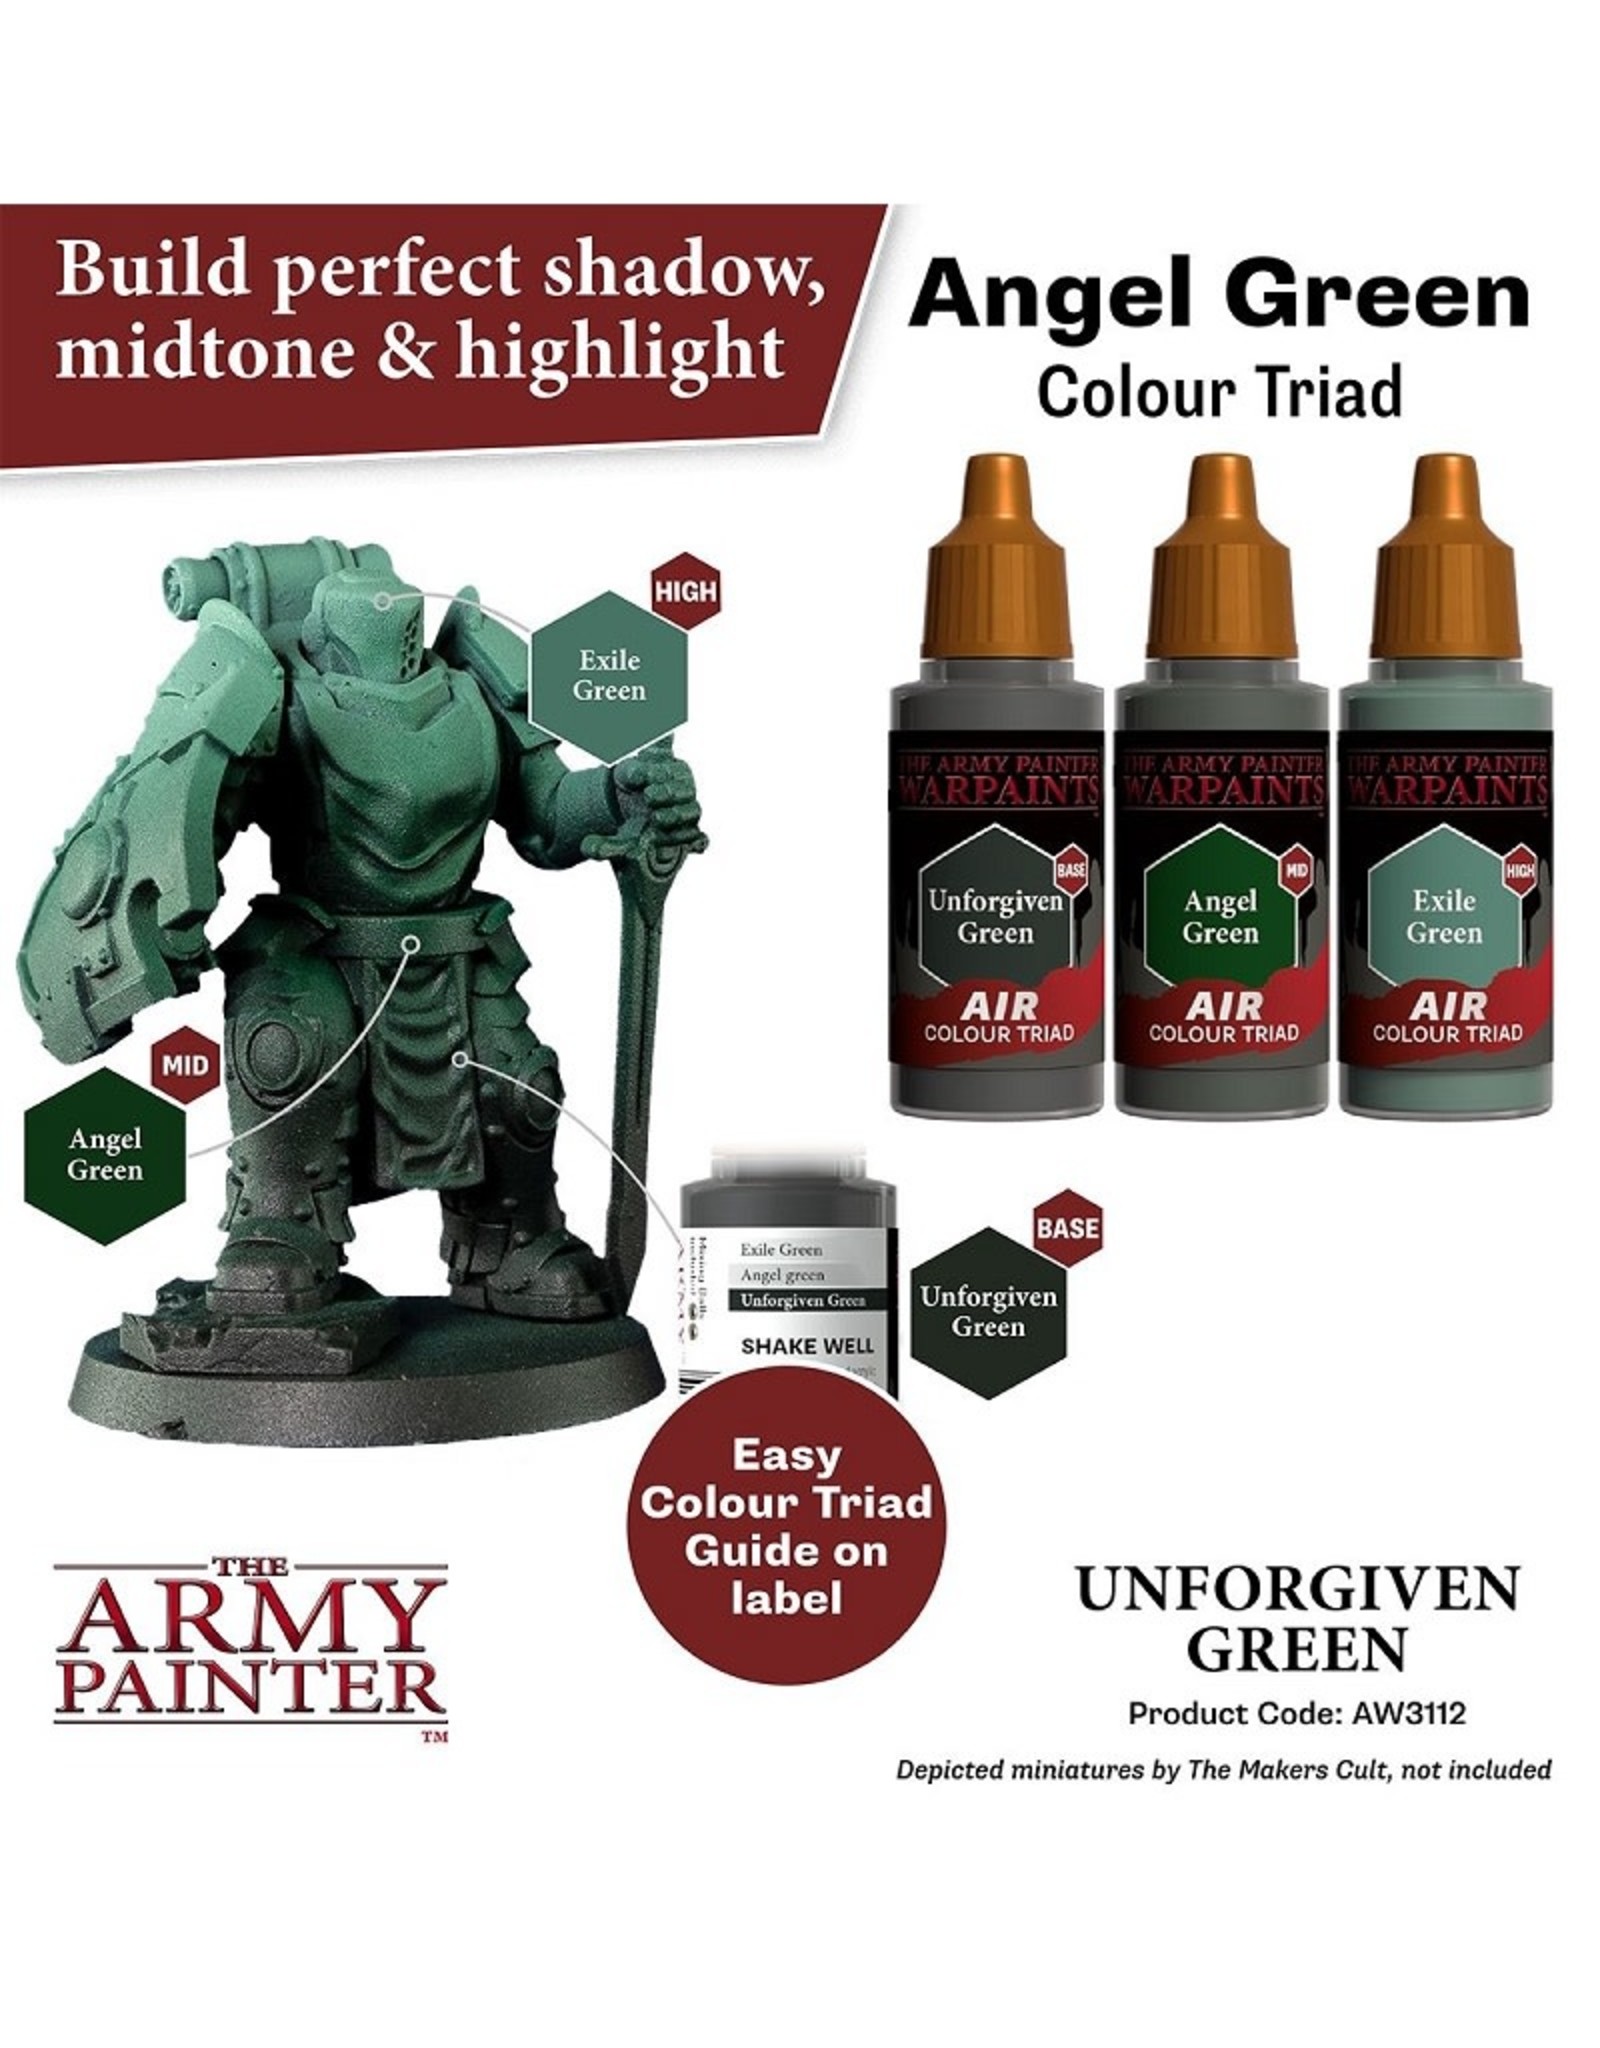 The Army Painter Warpaint Air: Unforgiven Green (18ml)